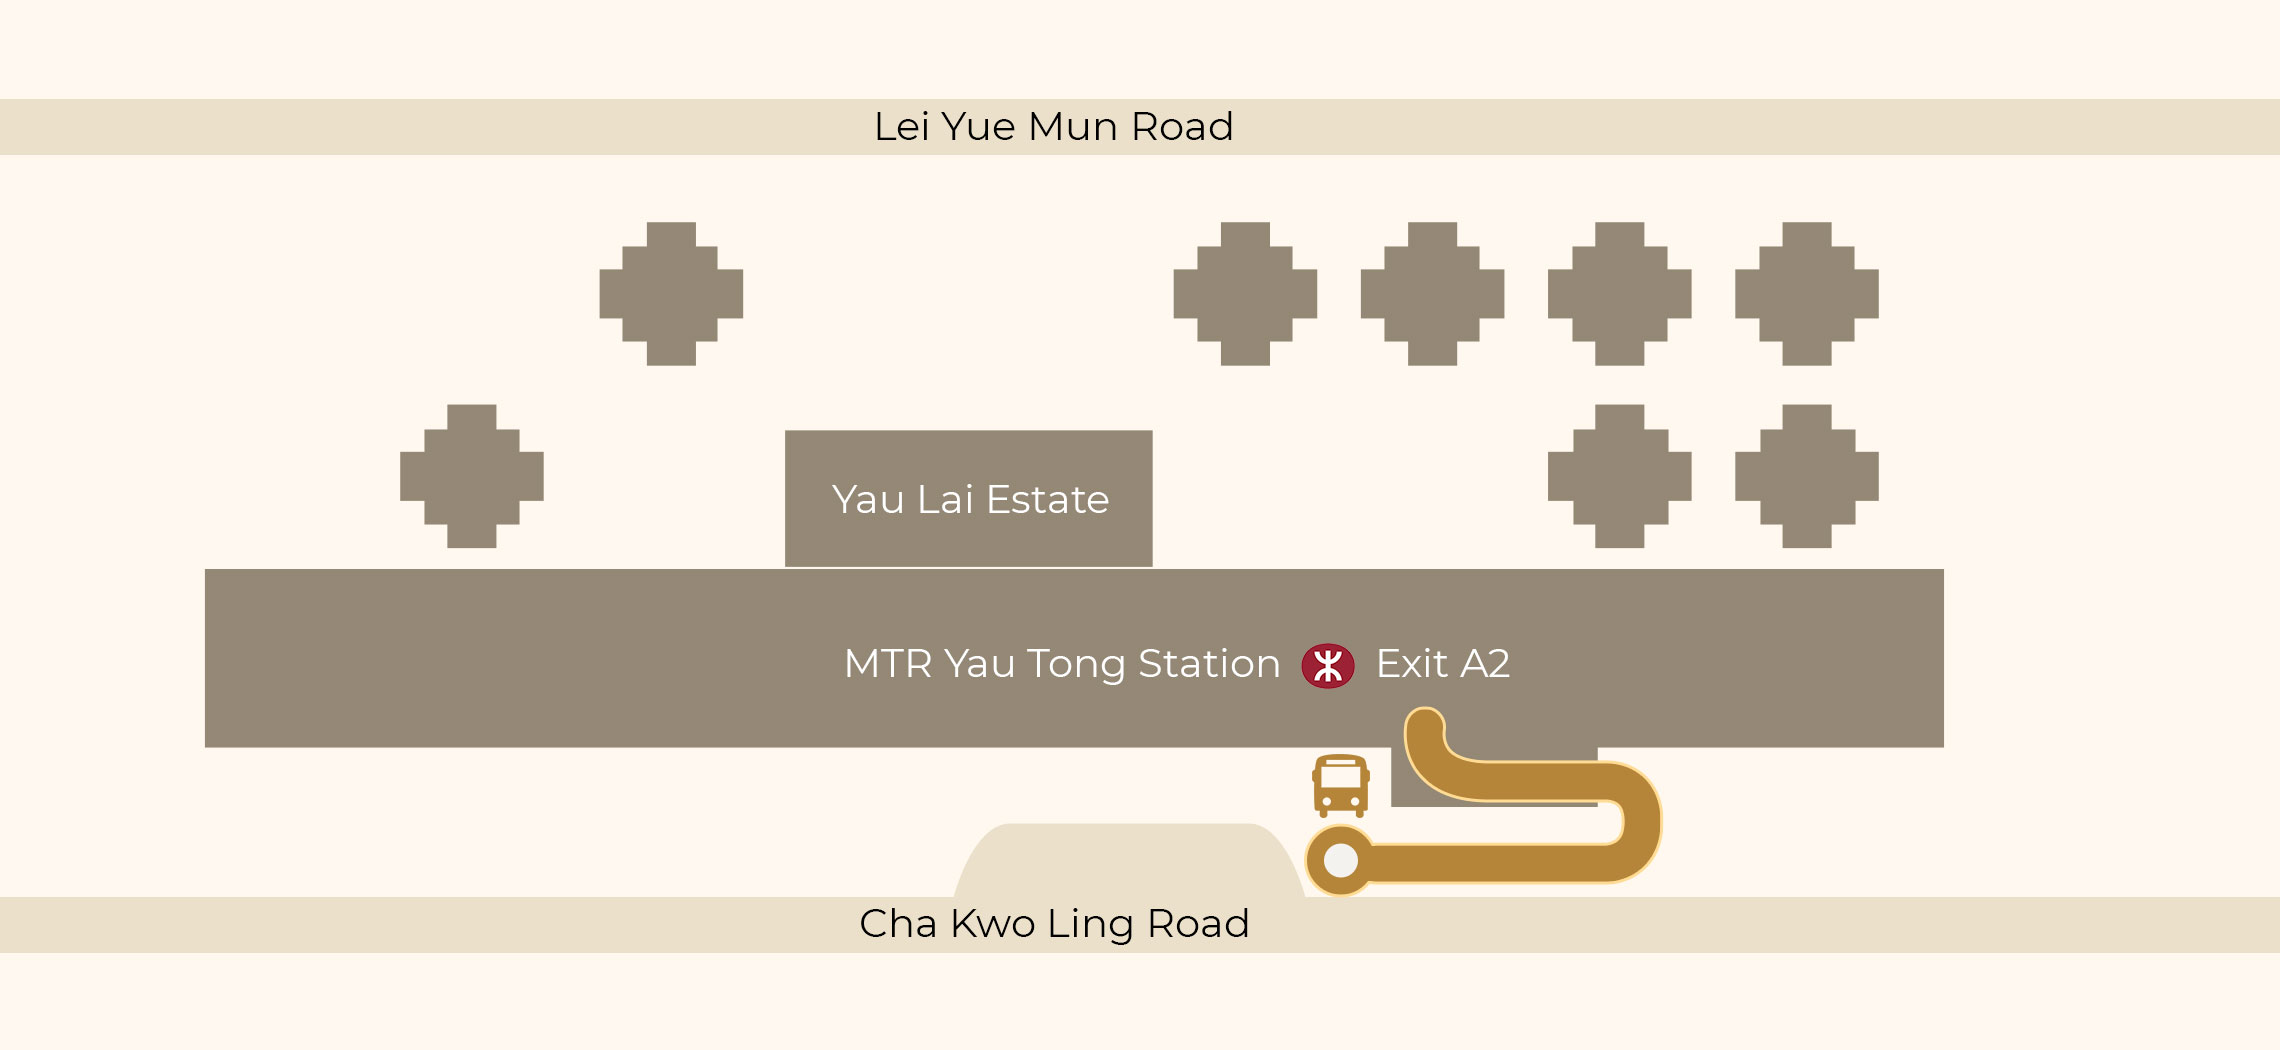 MTR Yau Tong Station